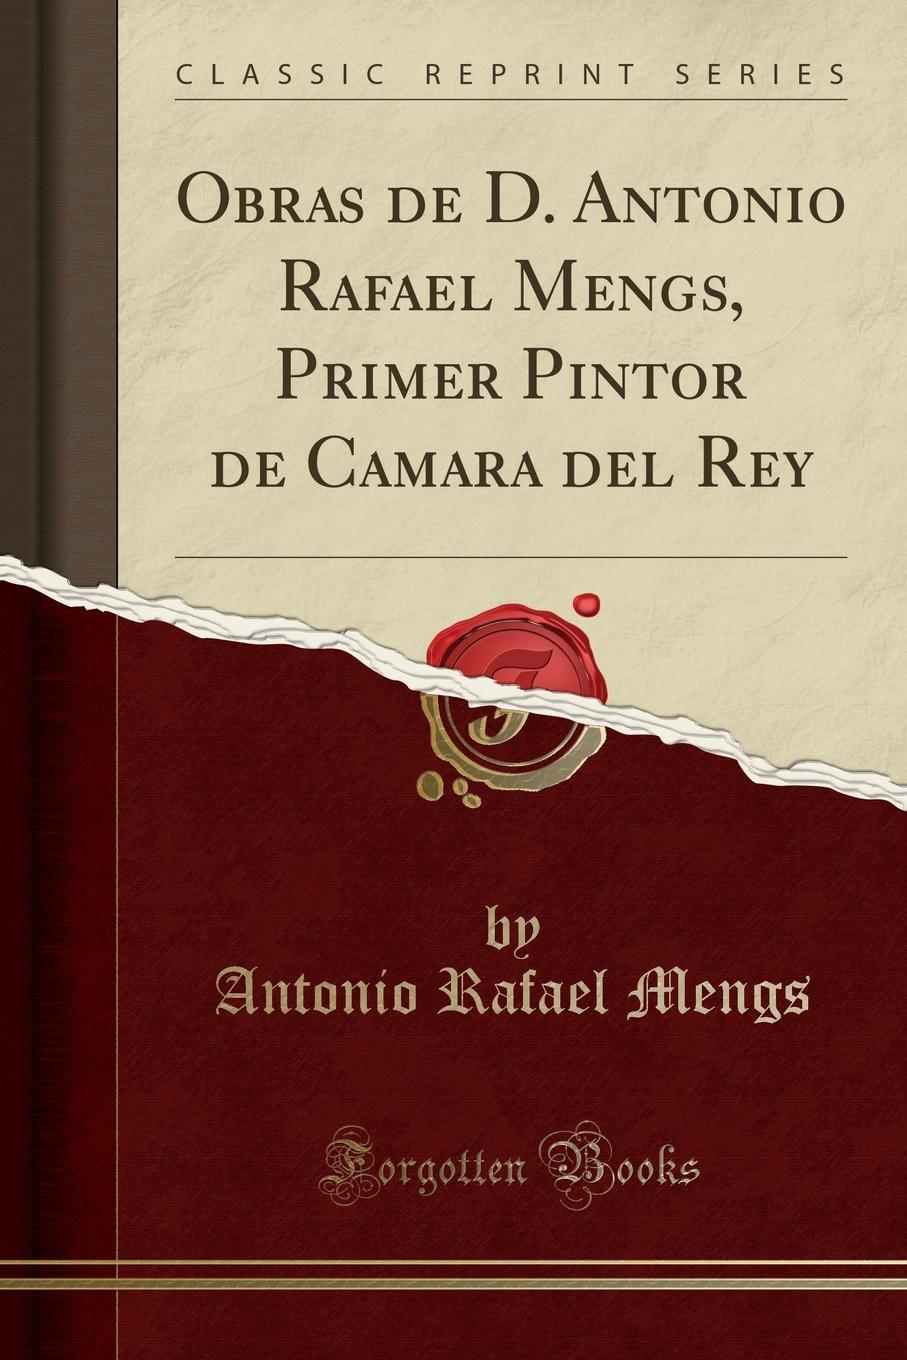 Antonio Rafael Mengs Obras de D. Antonio Rafael Mengs, Primer Pintor de Camara del Rey (Classic Reprint)